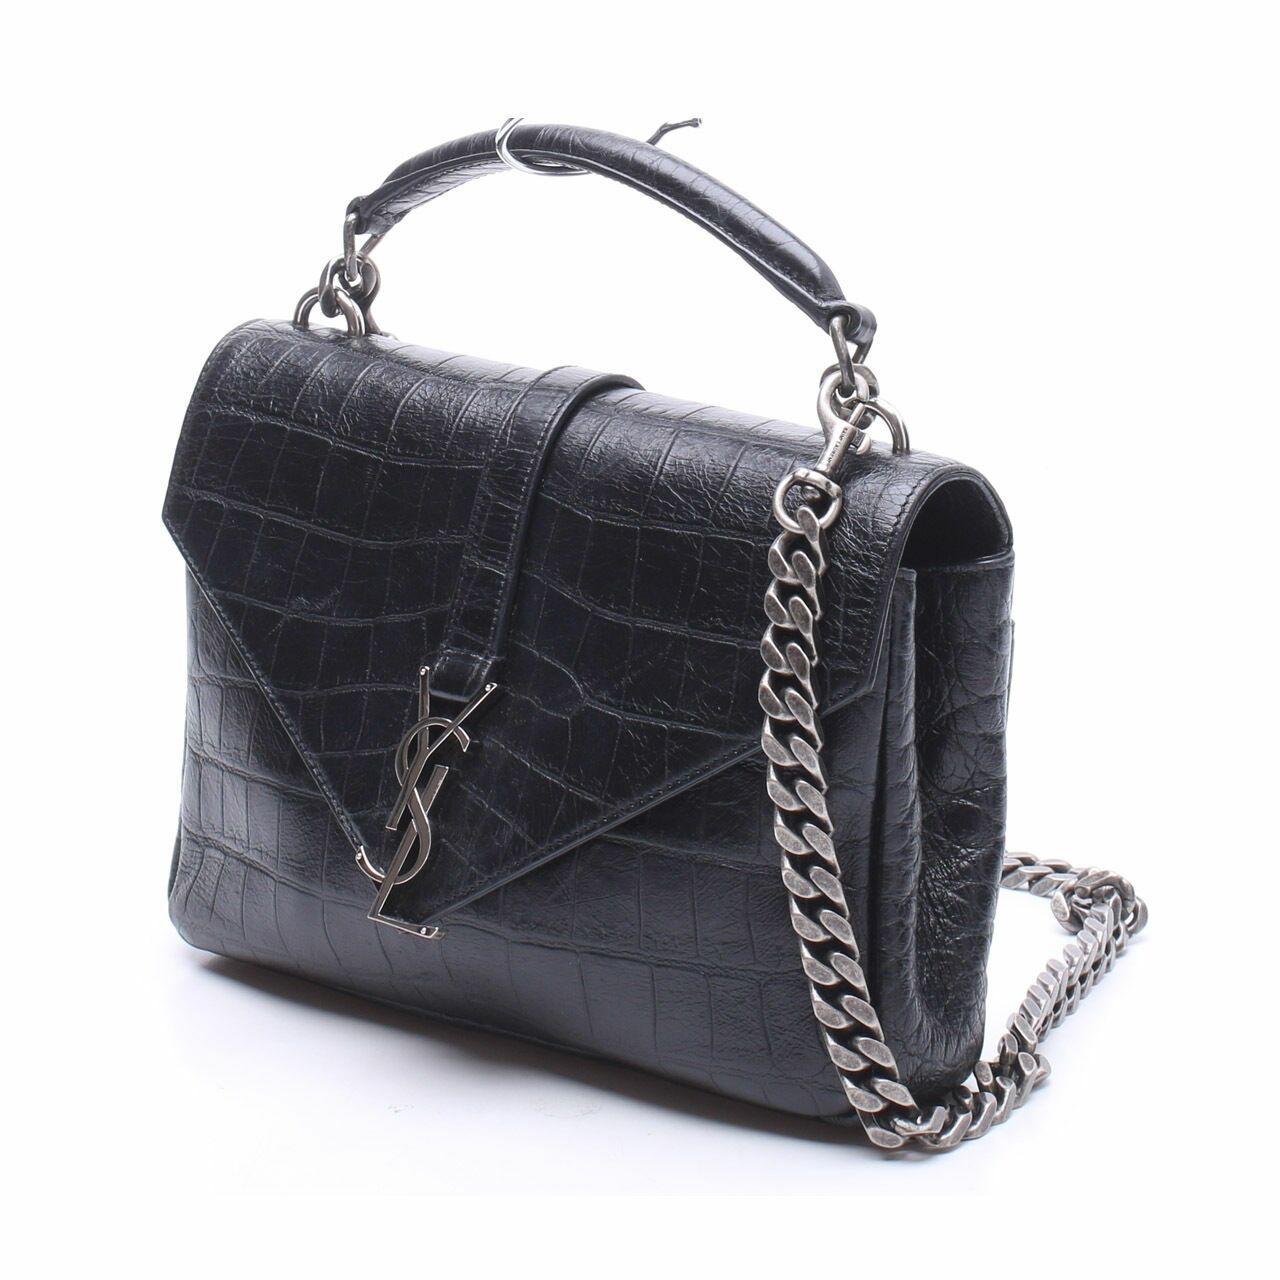 Yves Saint Laurent Black Leather Satchel Bag